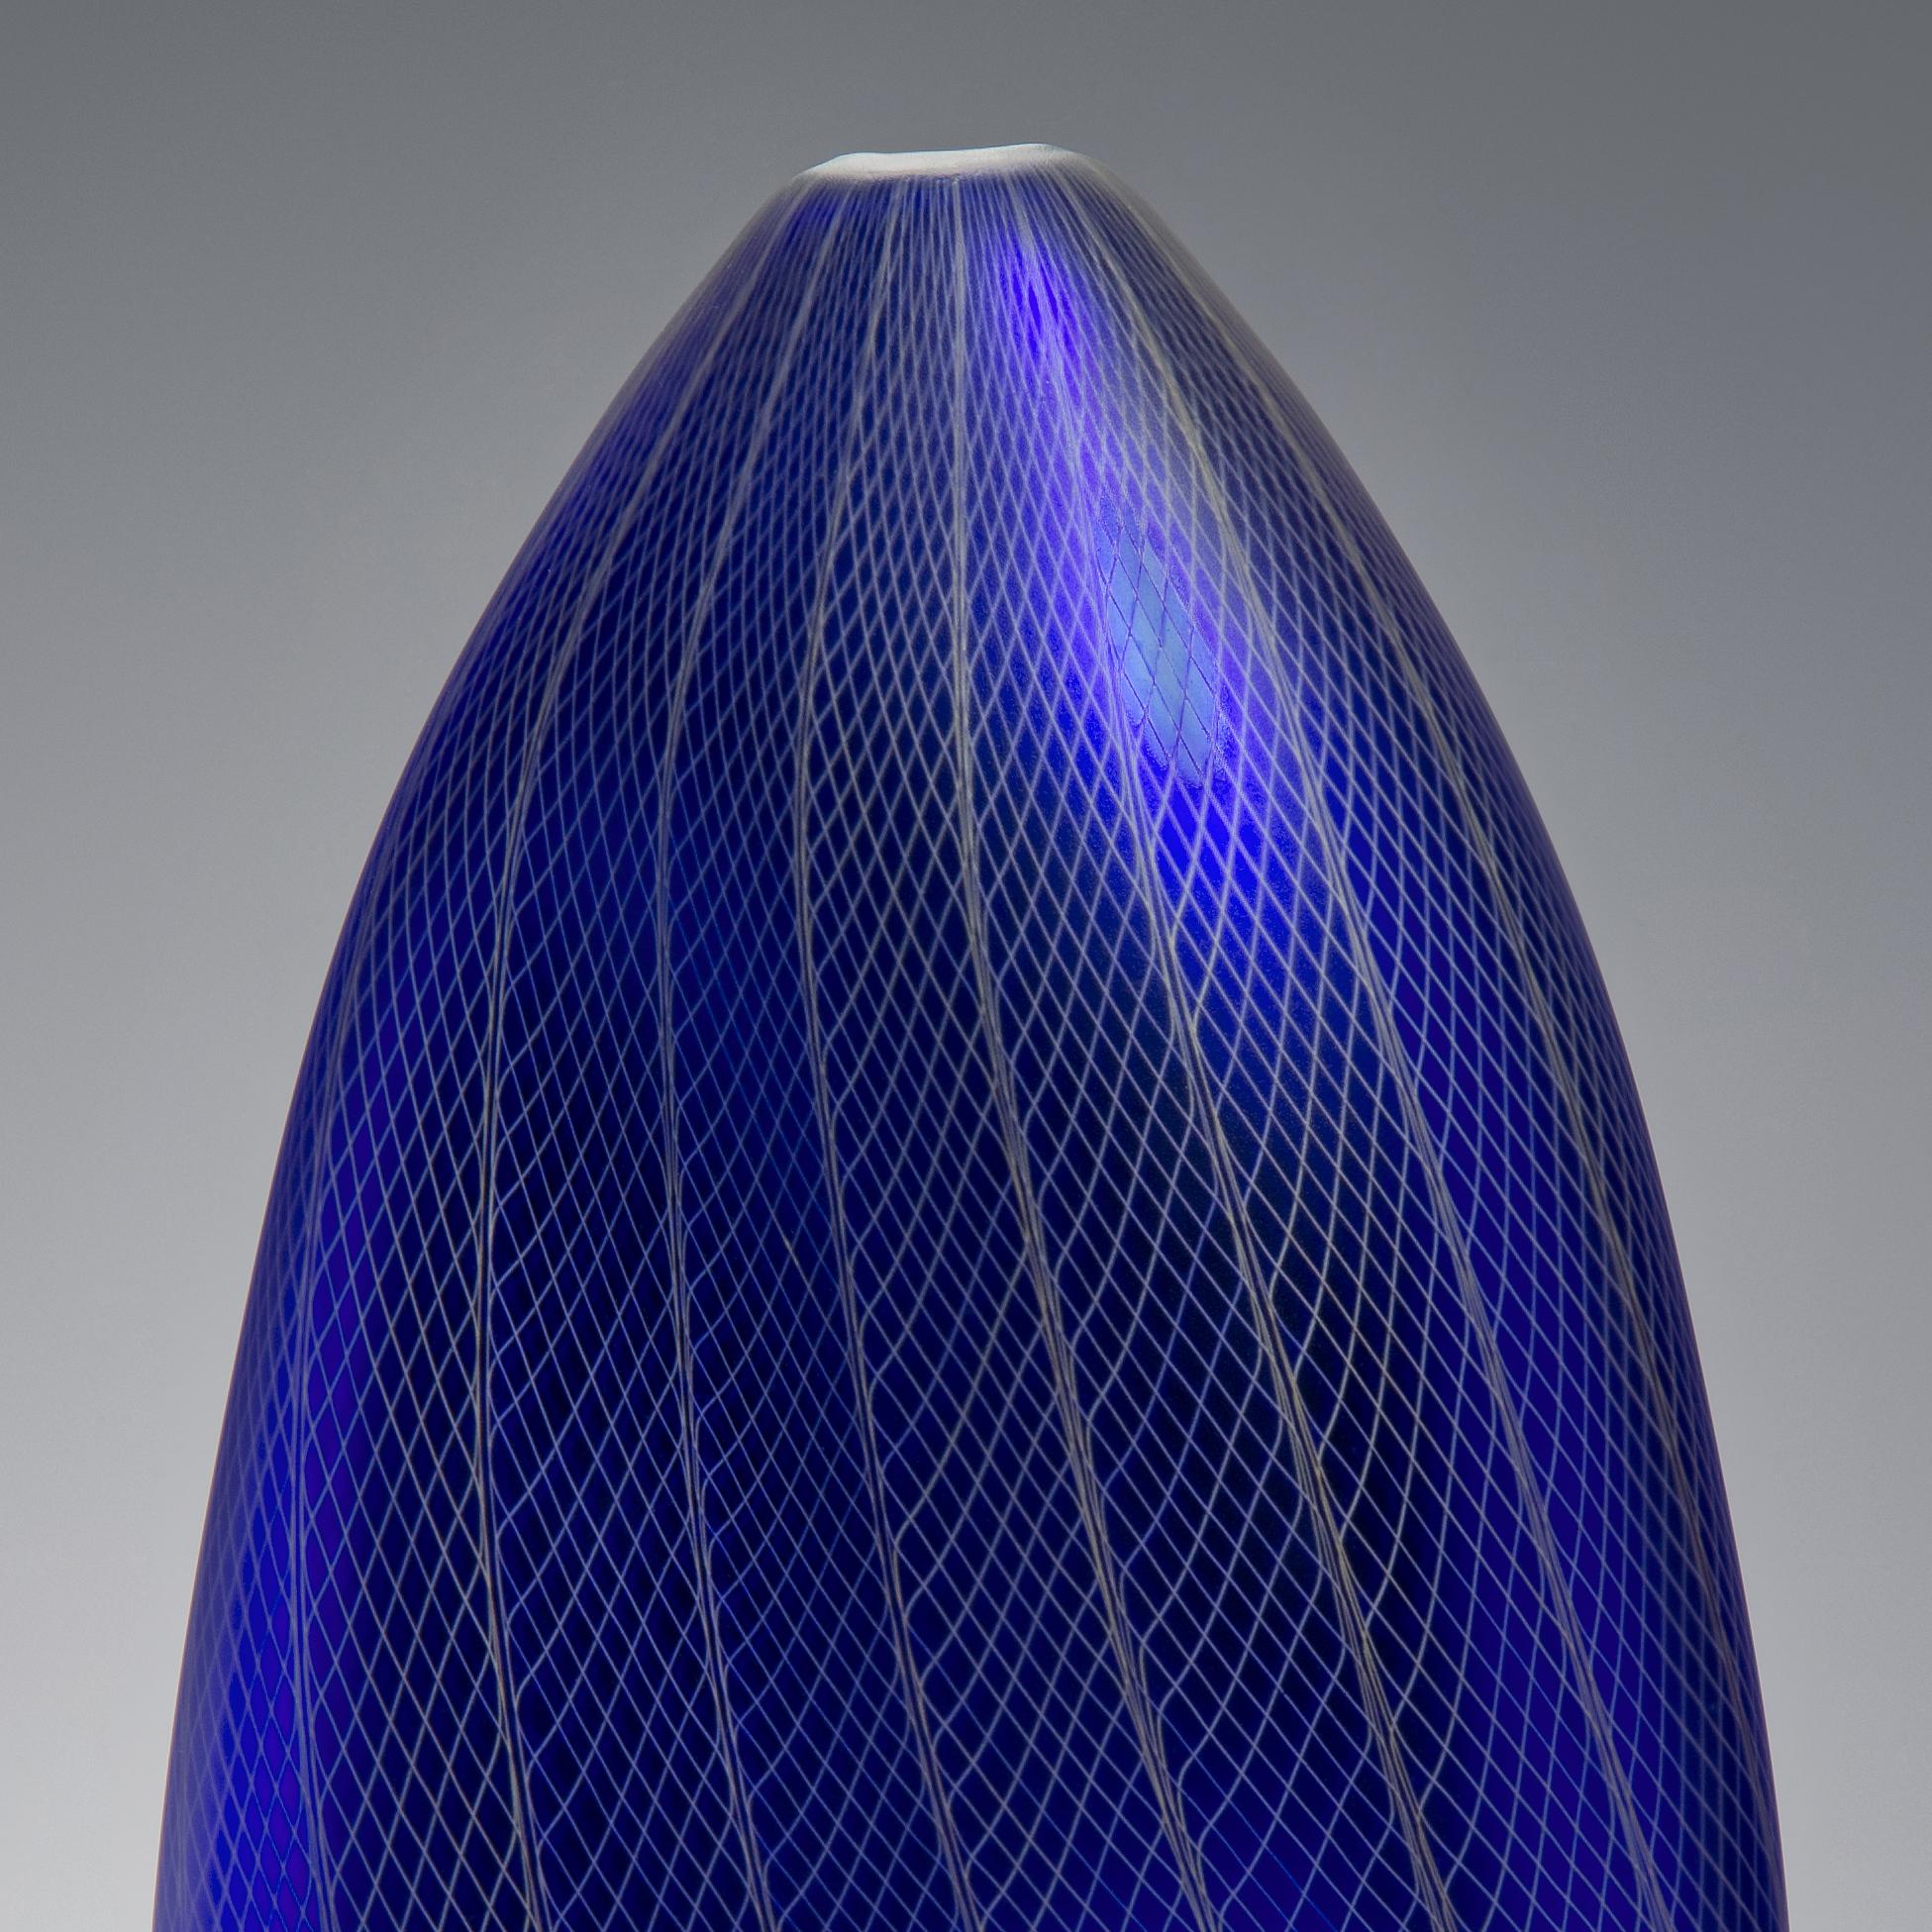 Modern Stratiform Cobaltum 1.0.001, a unique blue glass sculpture by Liam Reeves For Sale